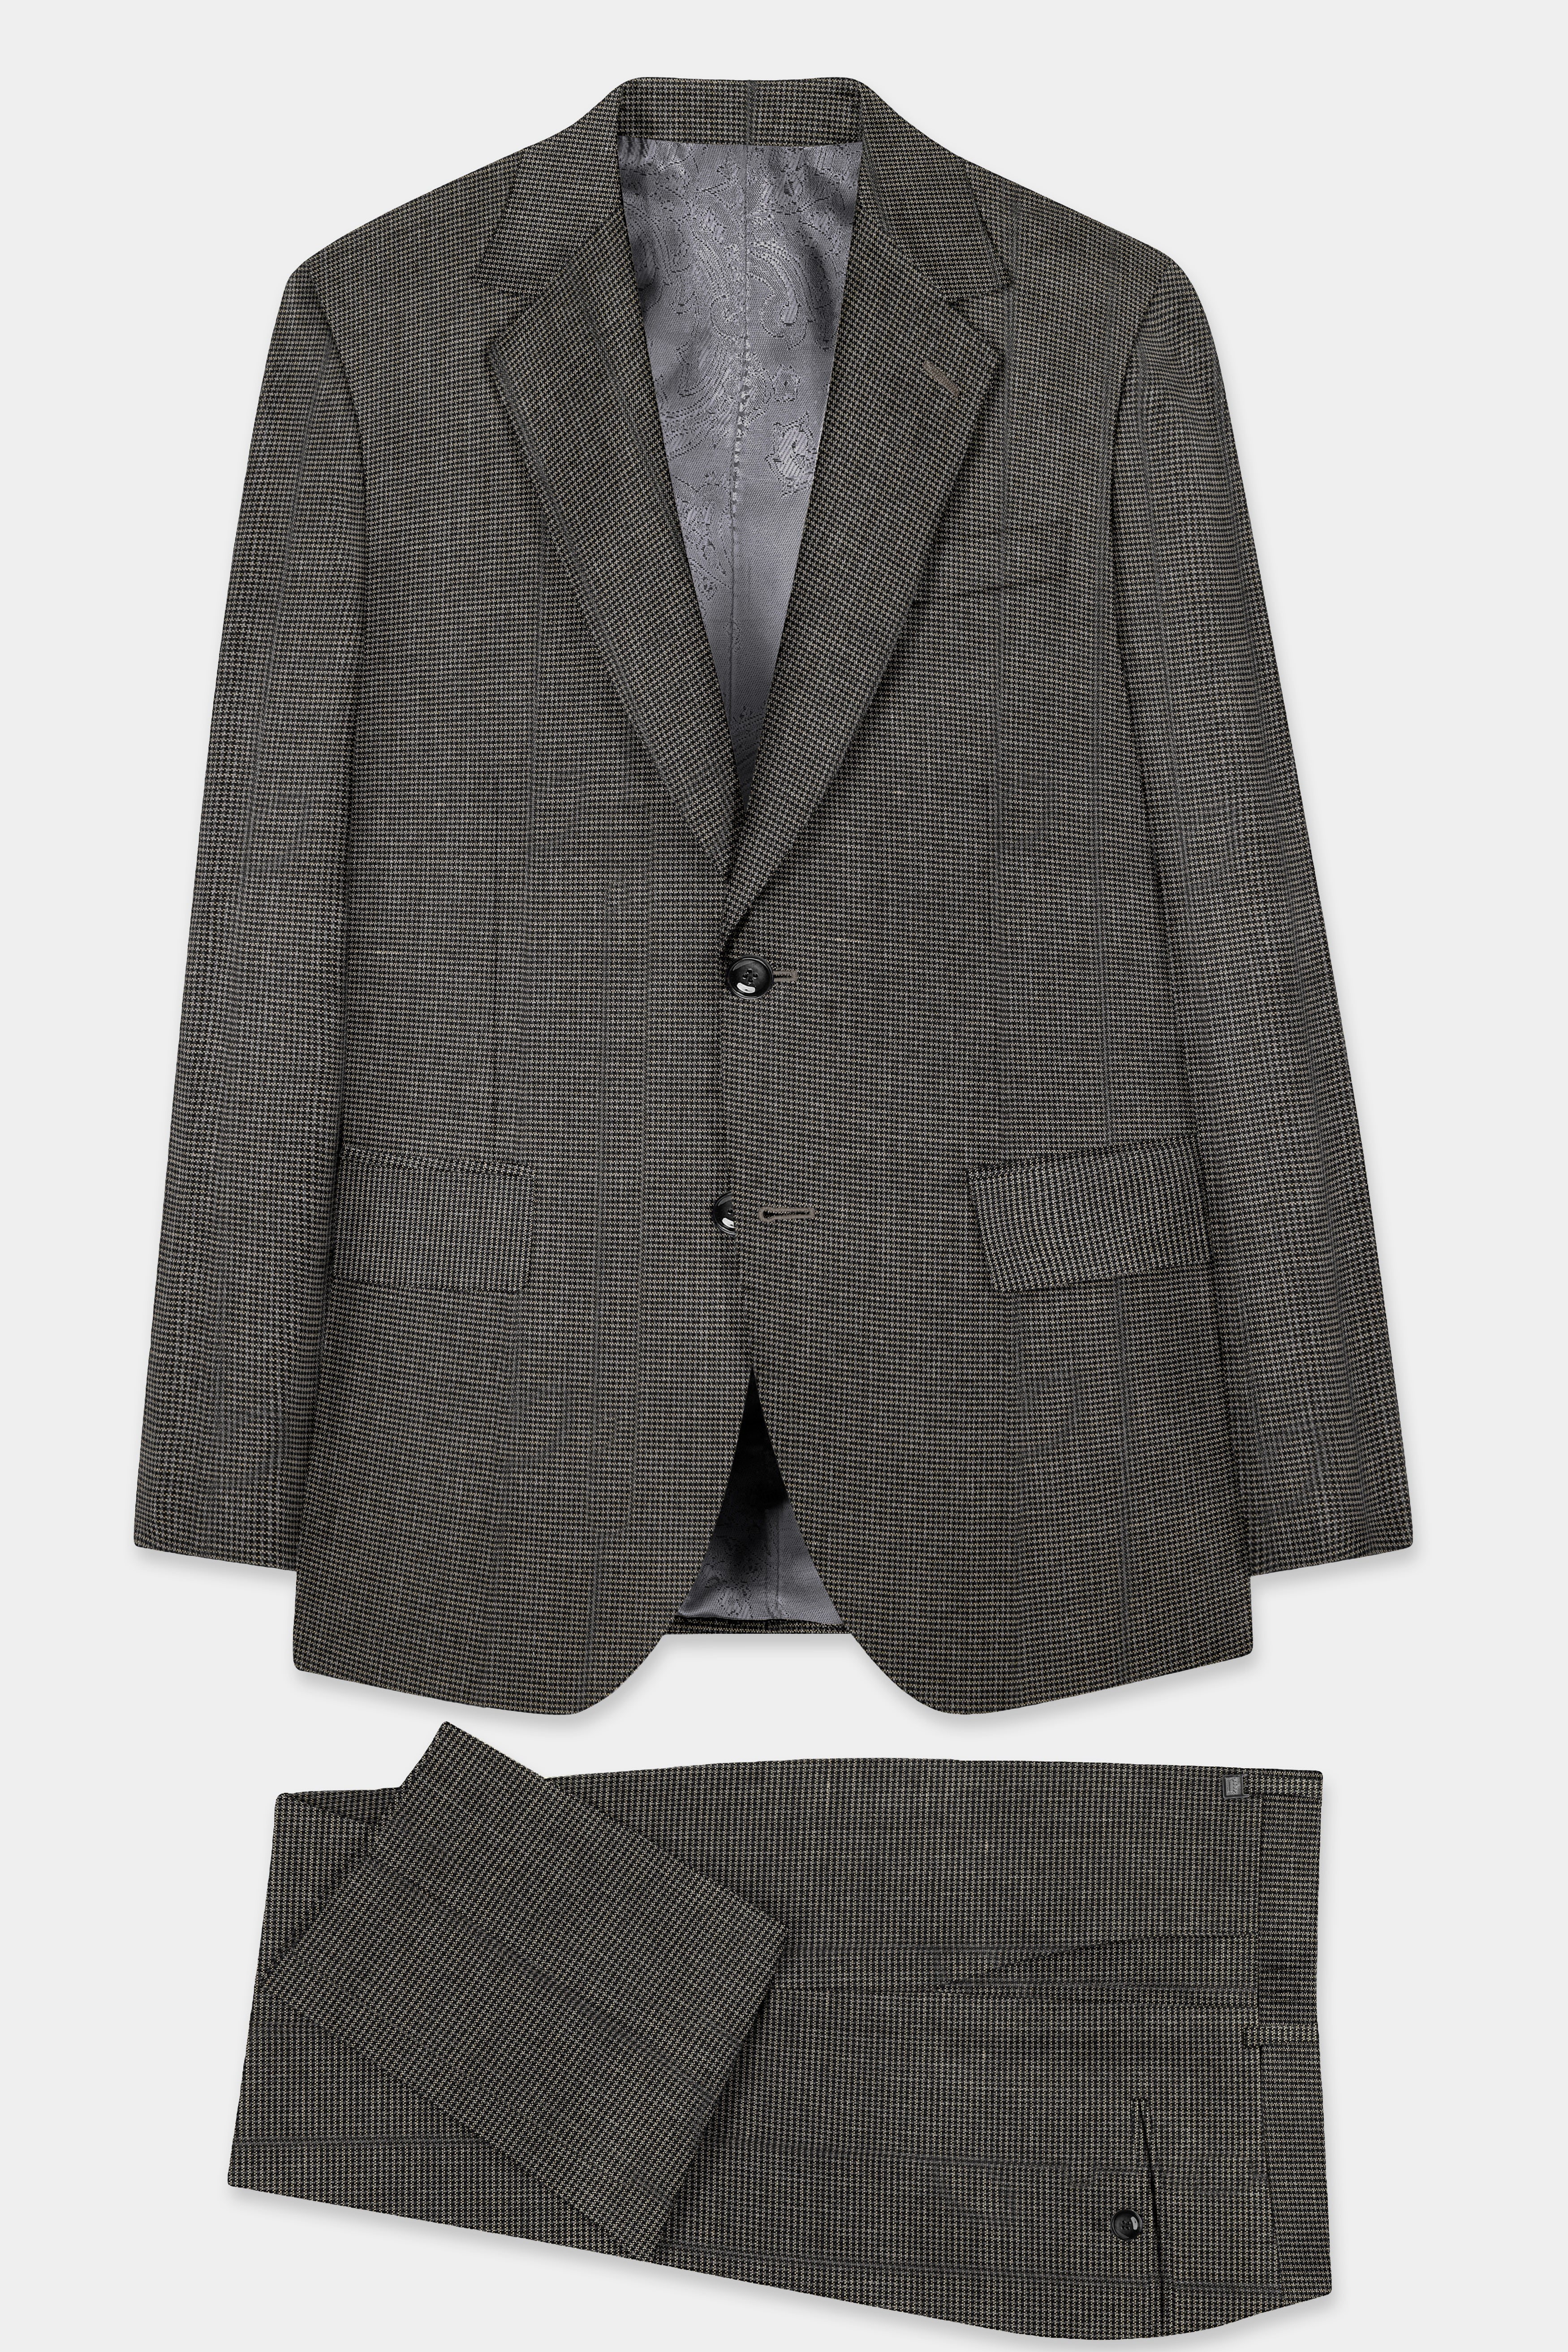 Iridium Gray Wool Rice Suit